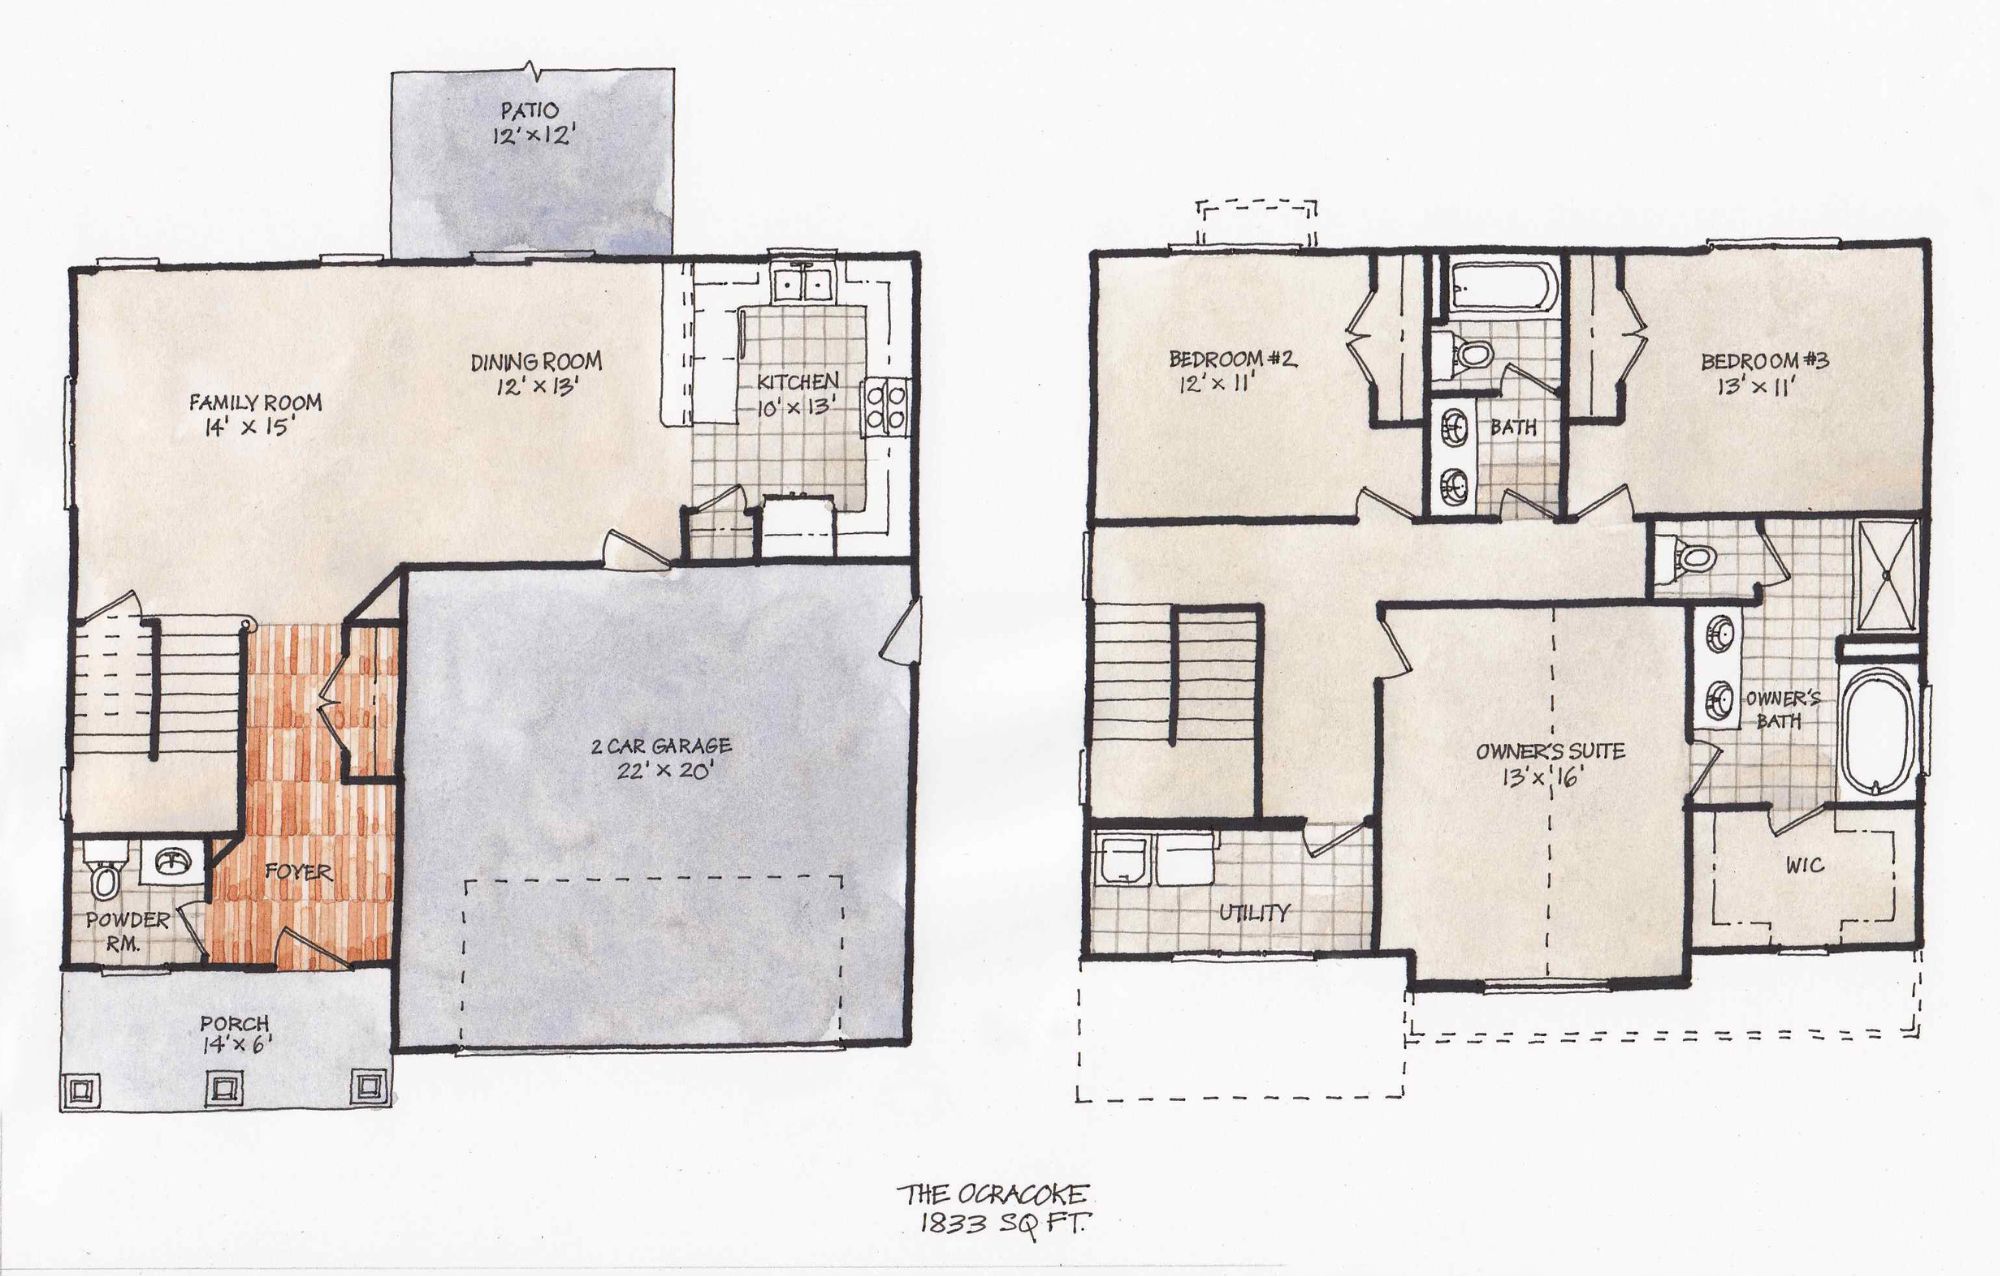 The Ocracoke floor plan image